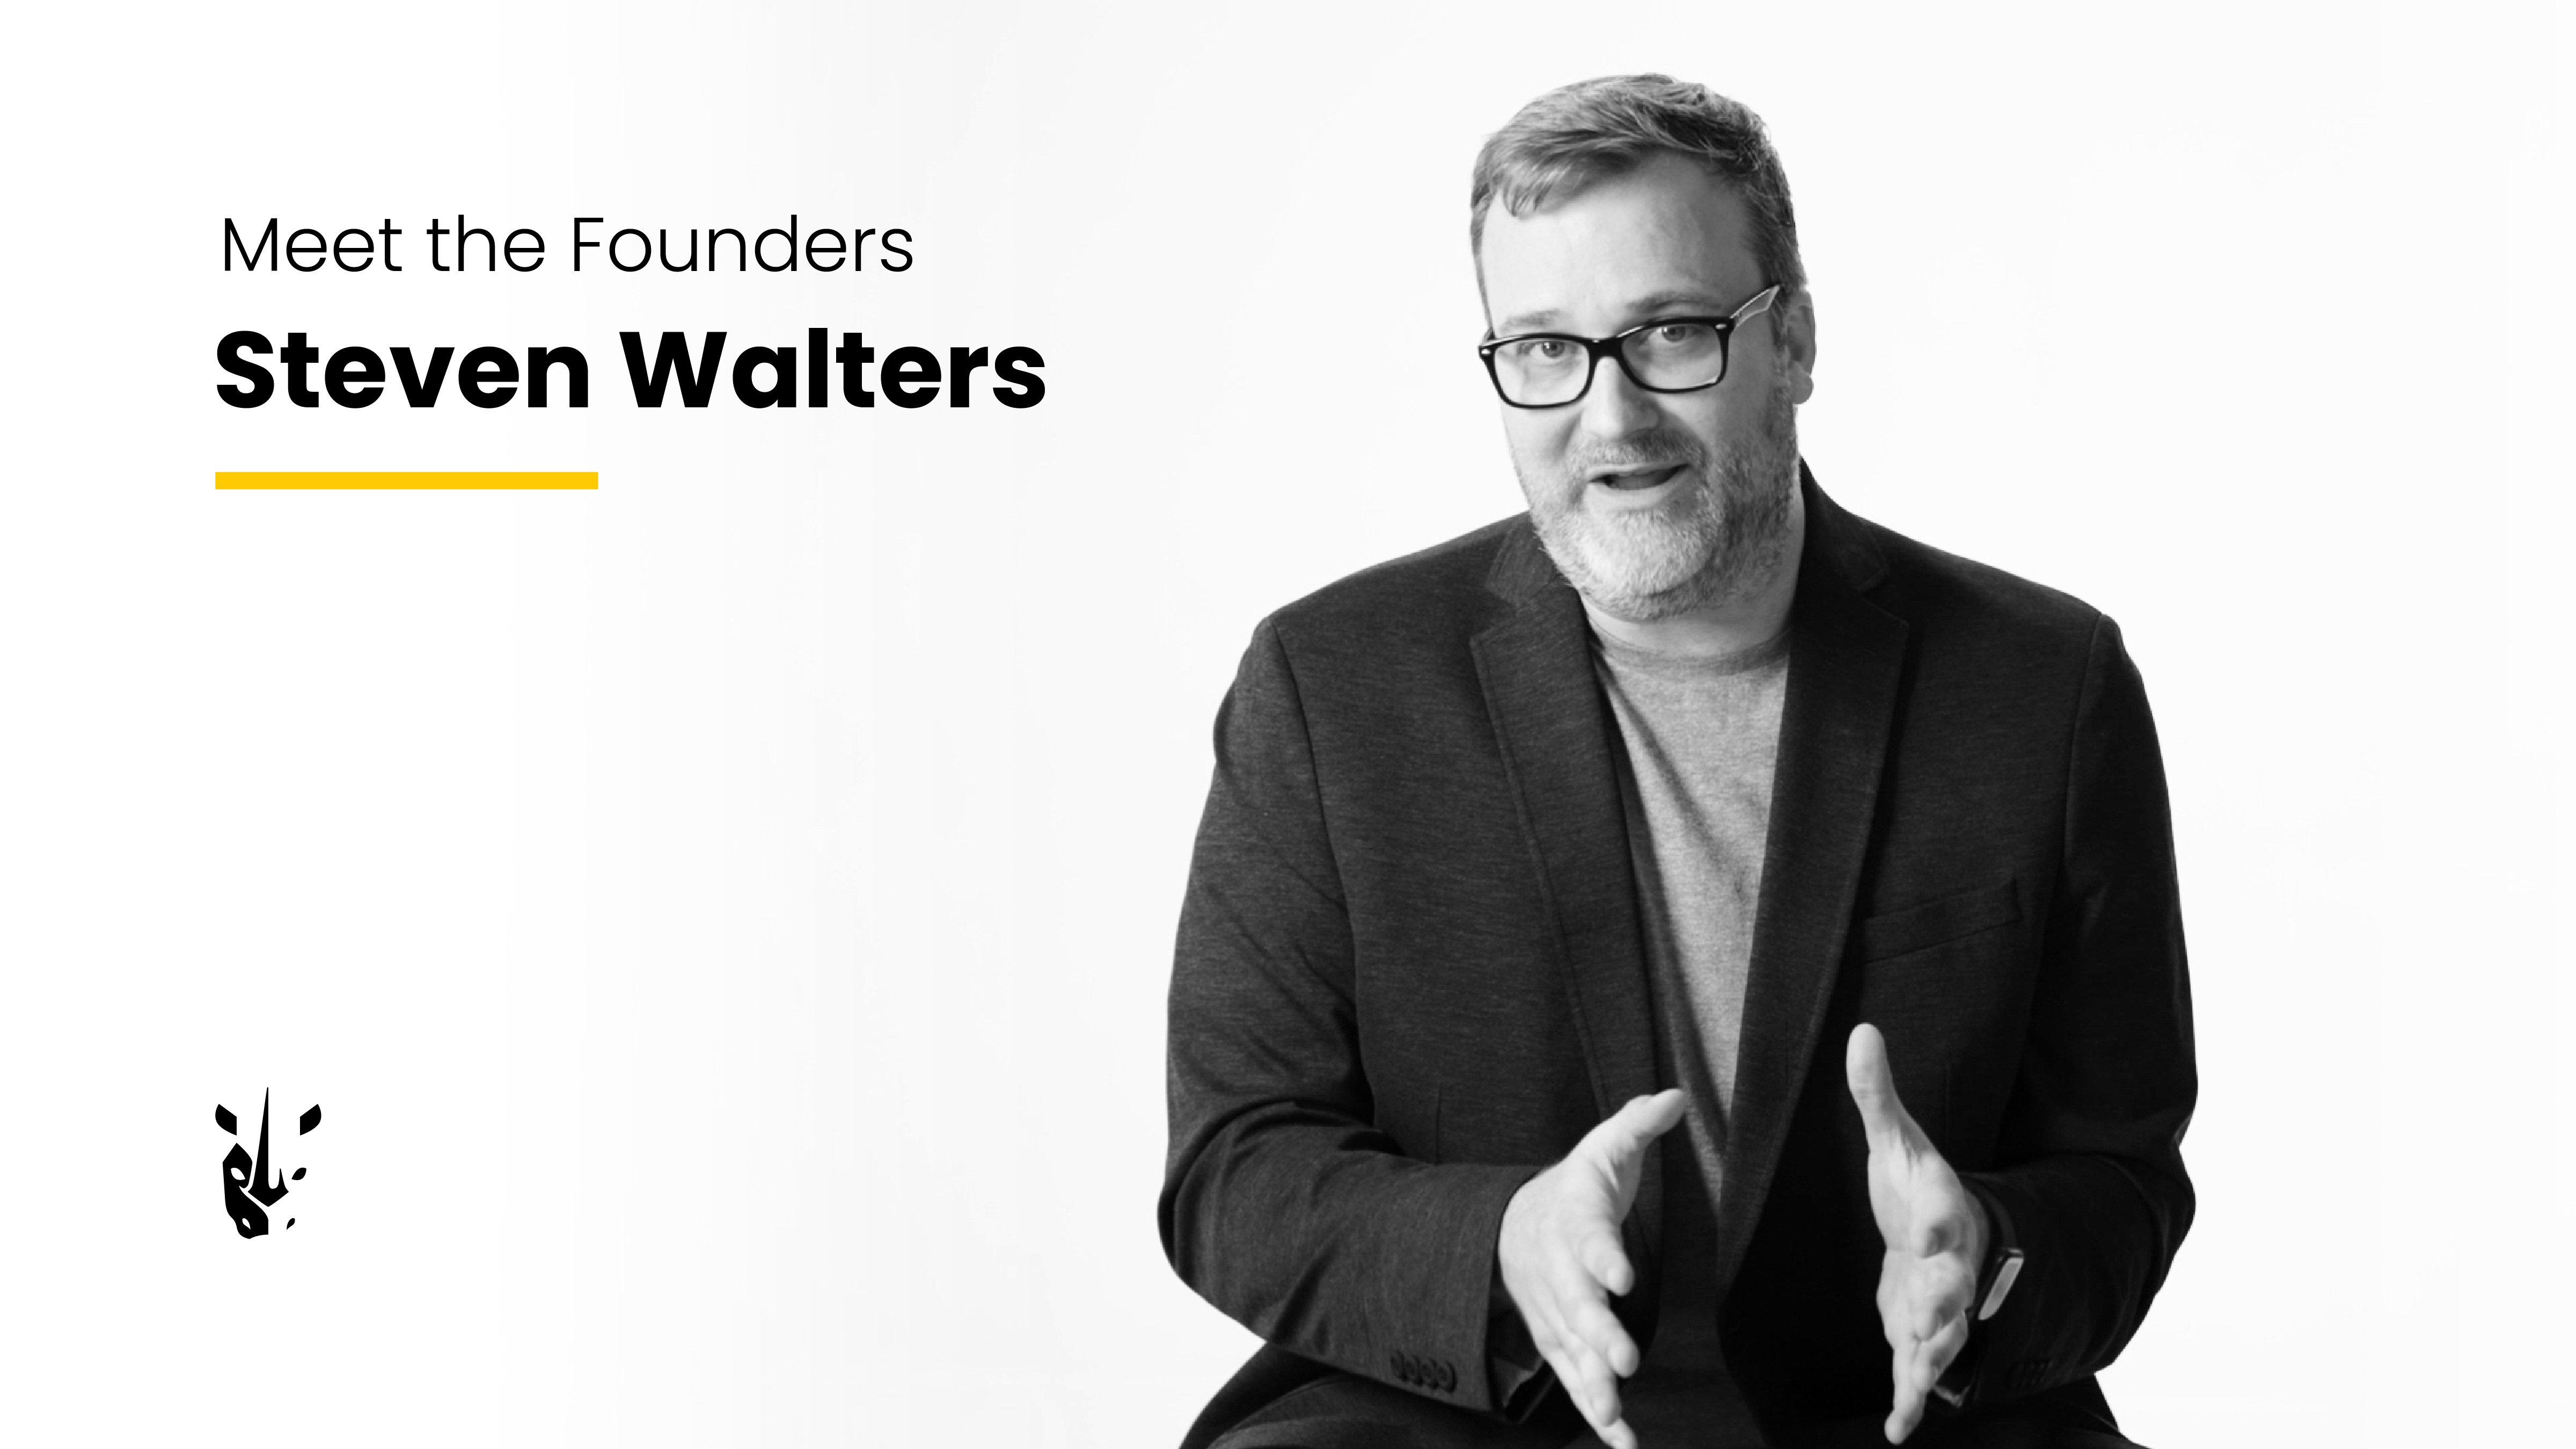 Meet the Founders: Steven Walters